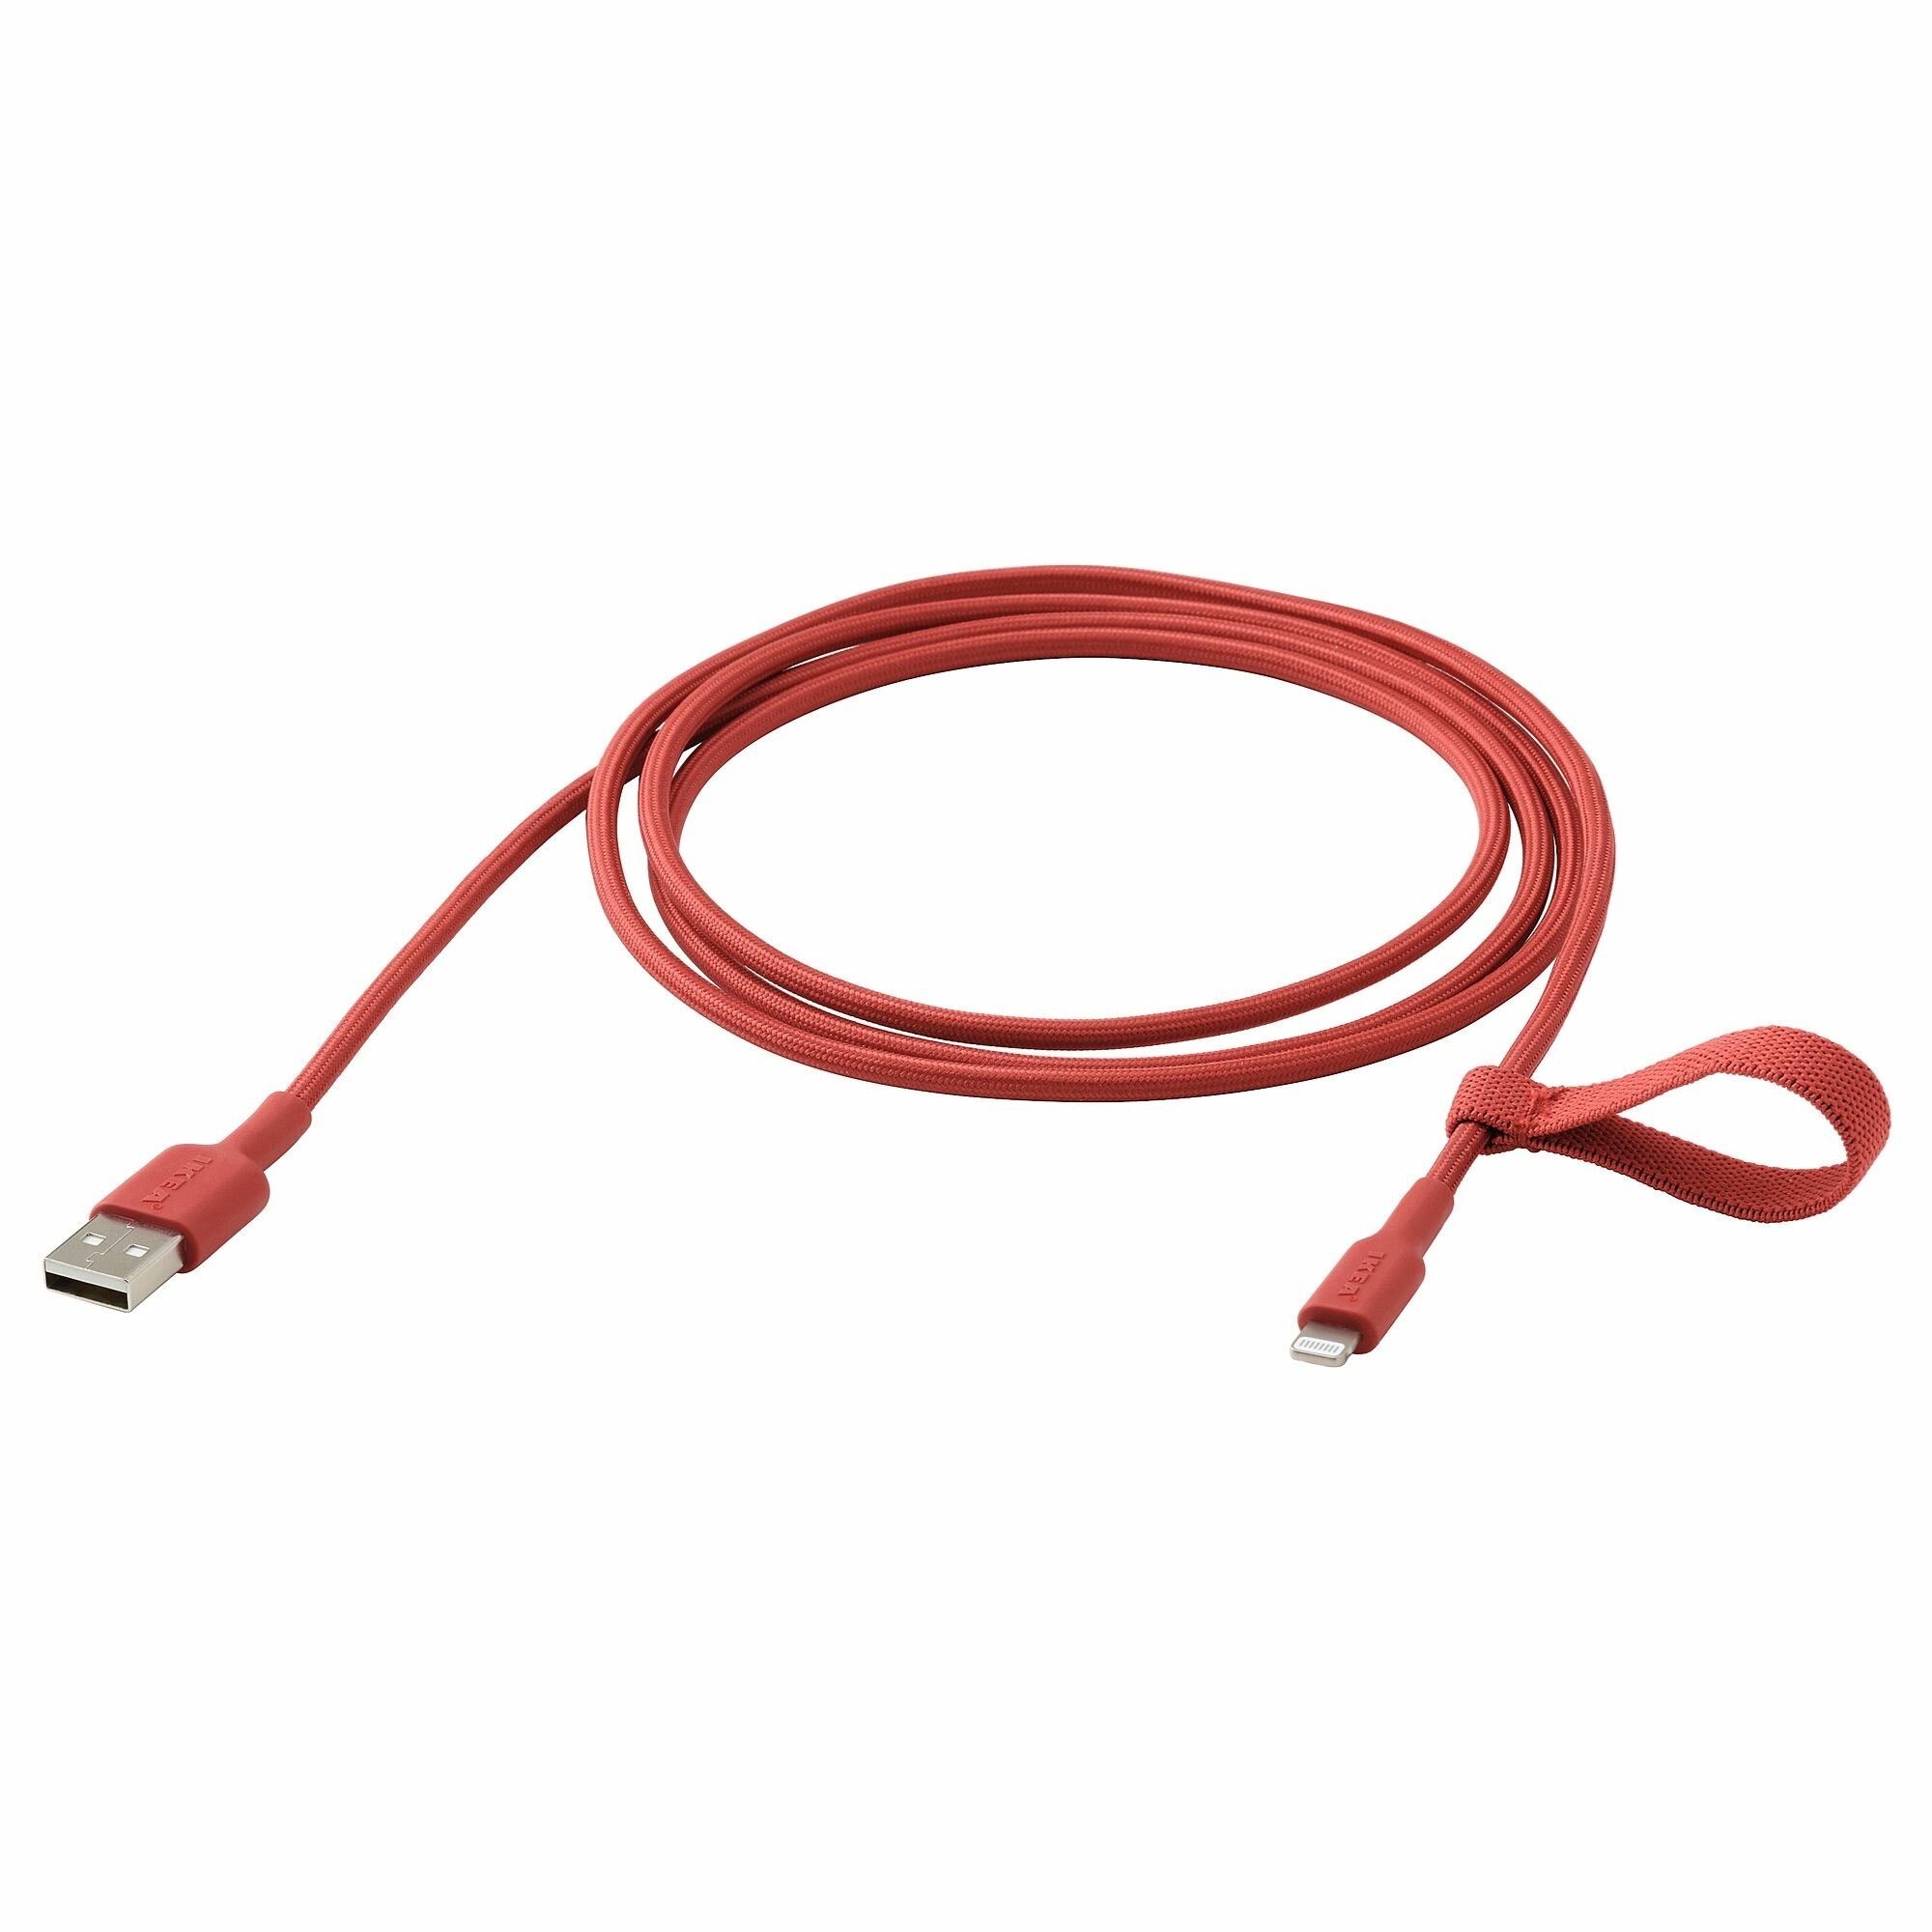 Икея / IKEA LILLHULT, LILLHULT, Кабель Lightning-USB, красный, 1,5 м